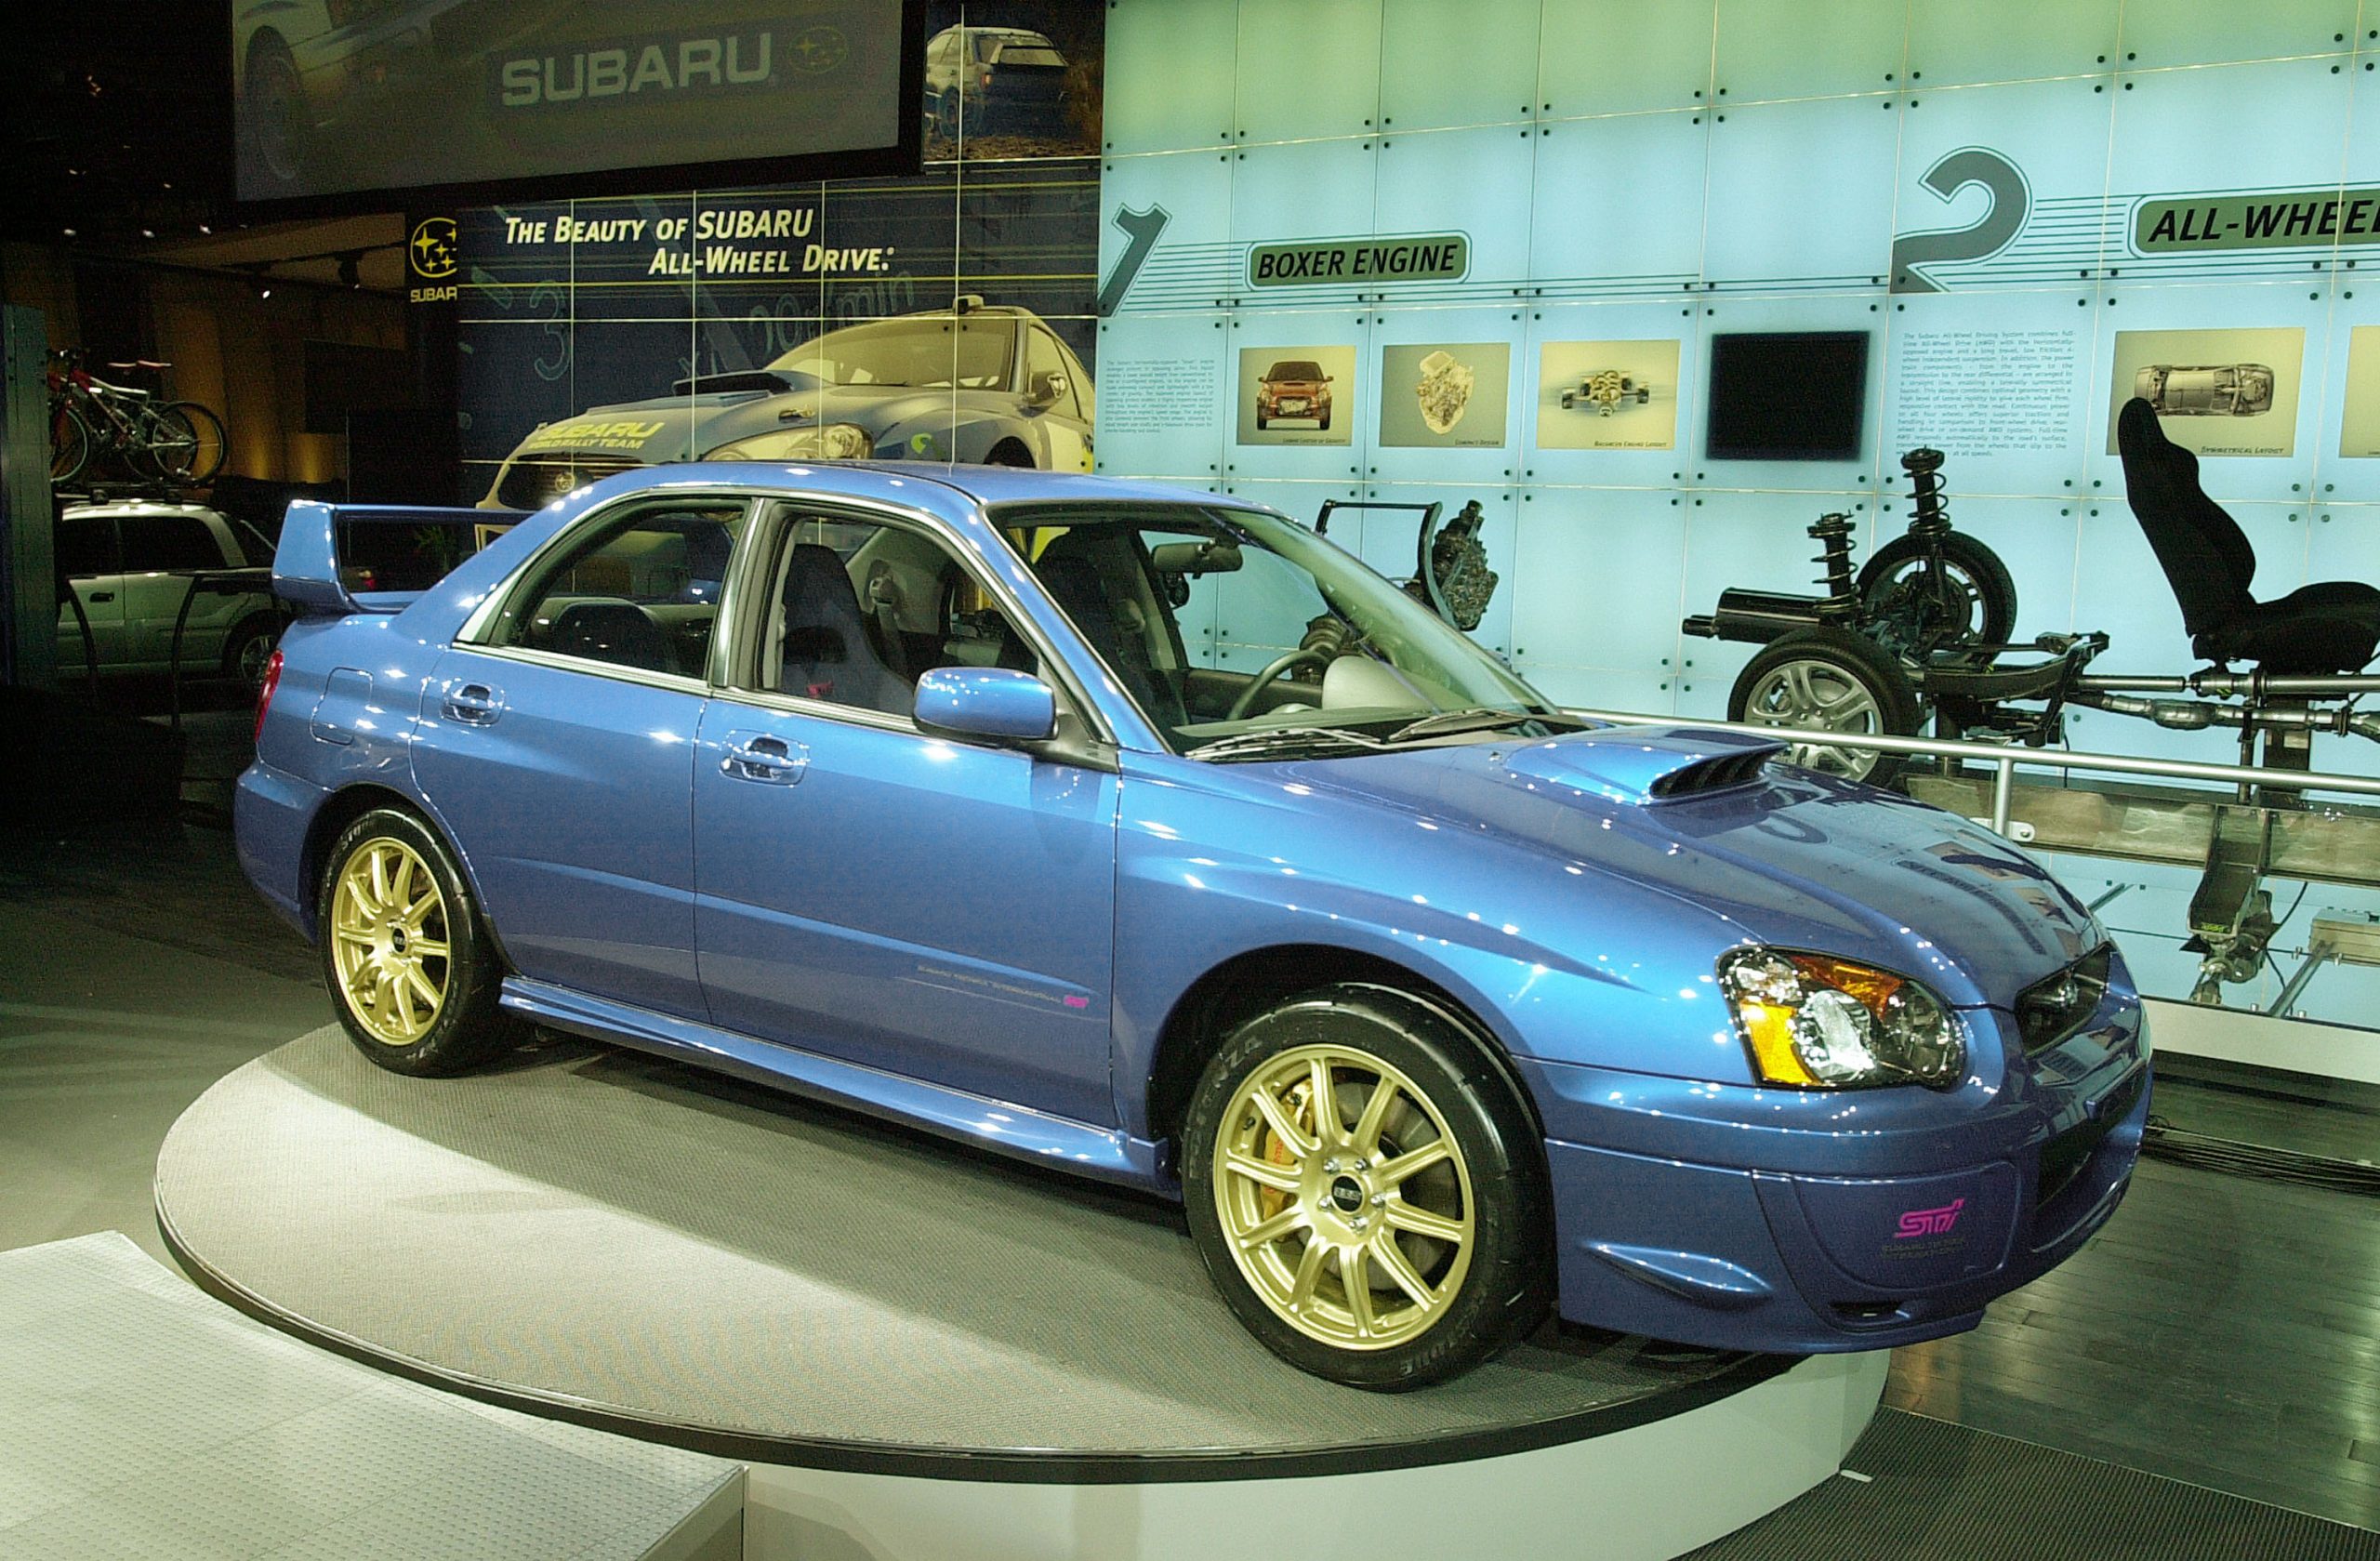 A 2004 Subaru Impreza WRX STI shot from the 3/4 angle at an auto show